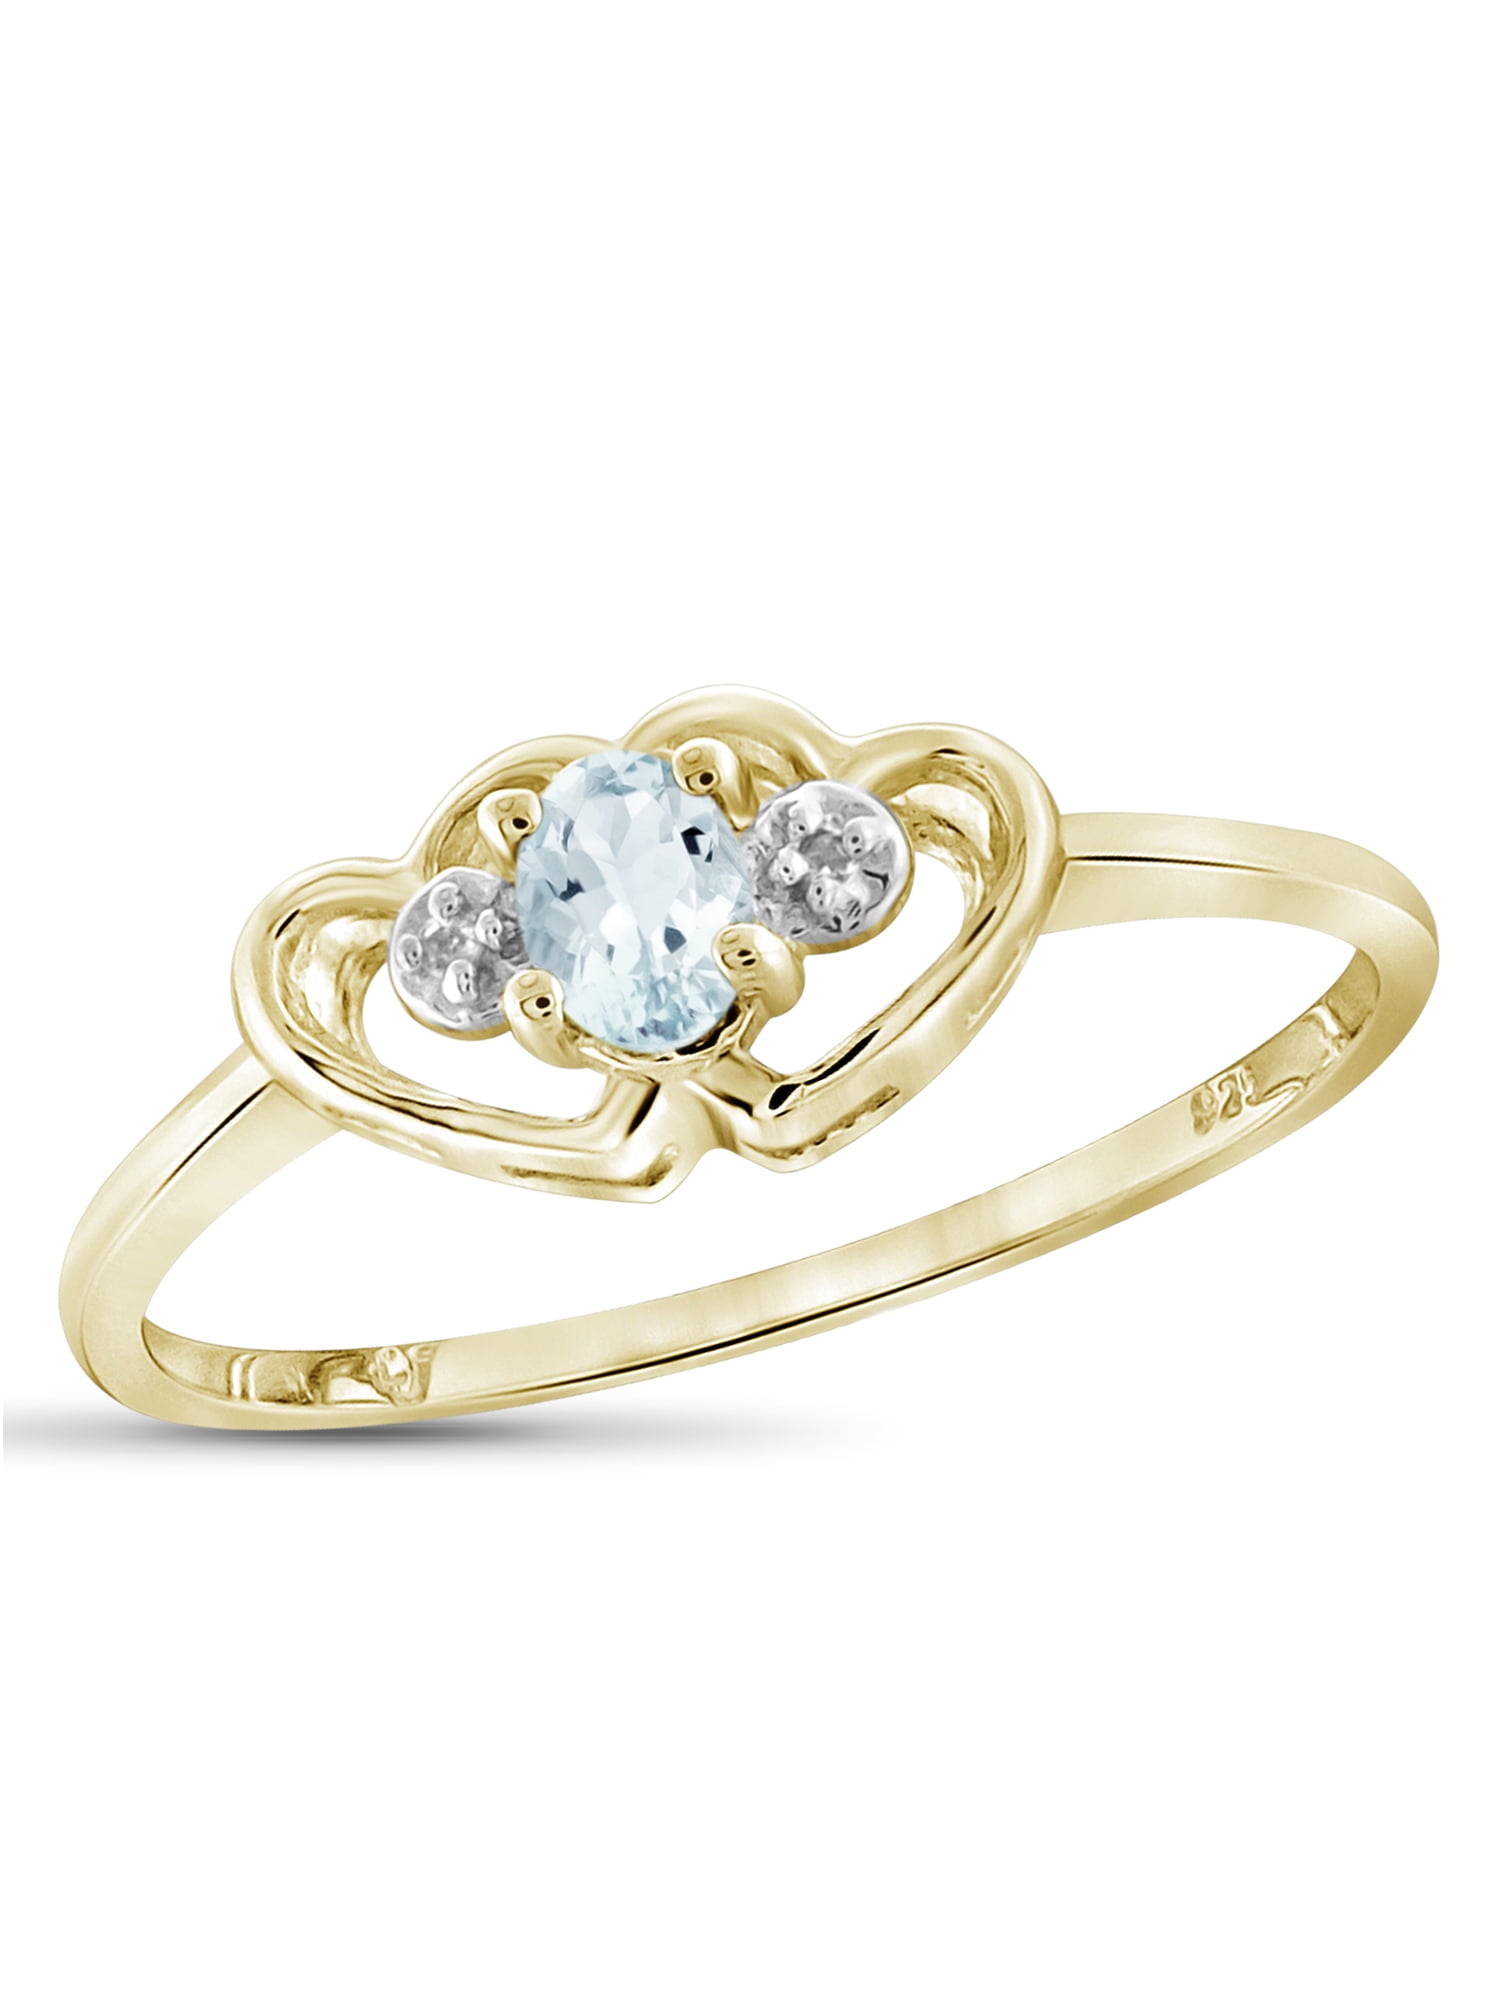 JewelersClub Aquamarine Ring Birthstone Jewelry 0 15 Carat 14K Gold Plated Silver White Diamond Accent Gemstone Rings Hypoallergenic Band e54afe94 c50a 4e88 8873 d3e1e27e83fe 1.ab9f78405334144b29bfcd16777c712b